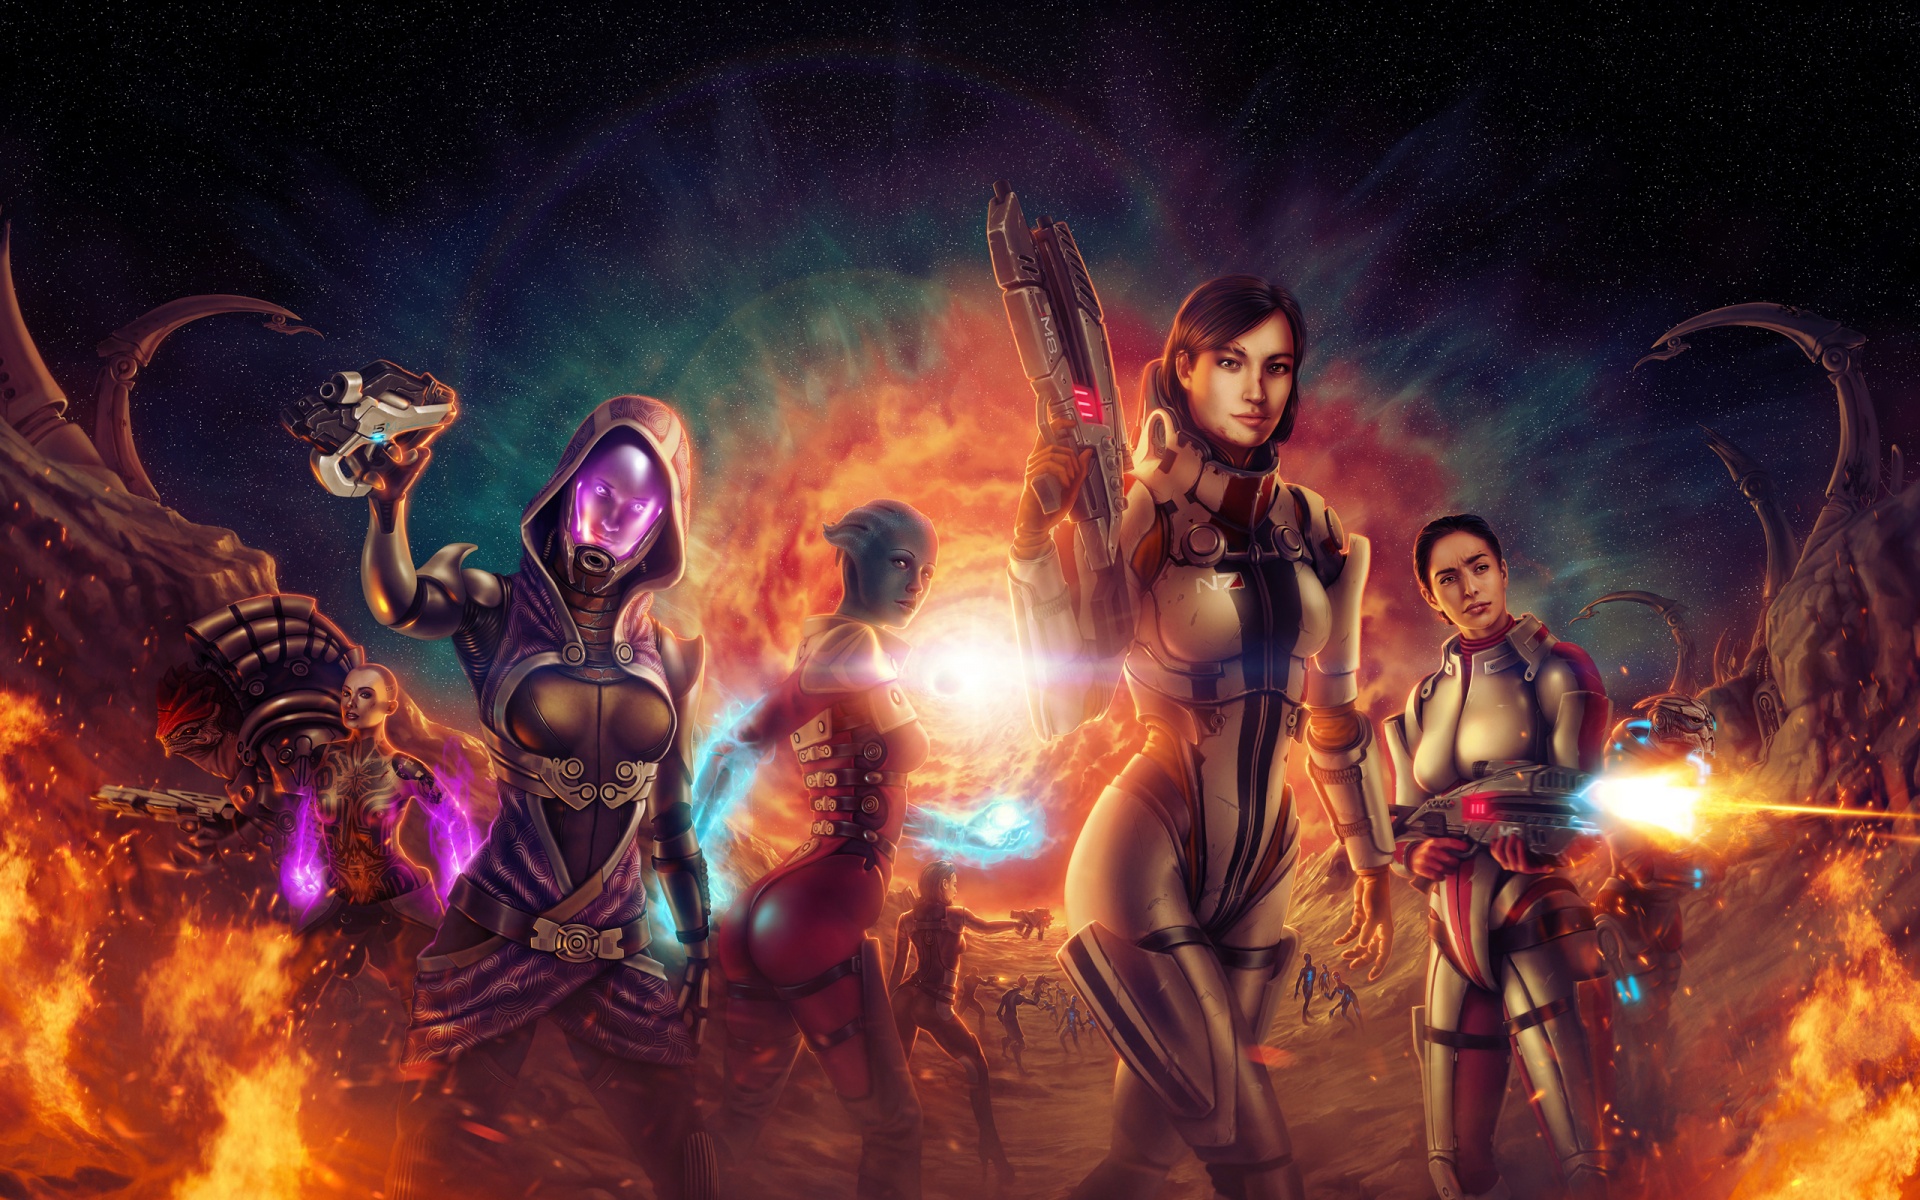 Mass Effect 3 video game characters including Tali'Zorah, Liara T'Soni, Jack, and Garrus Vakarian gathered in a striking desktop wallpaper.